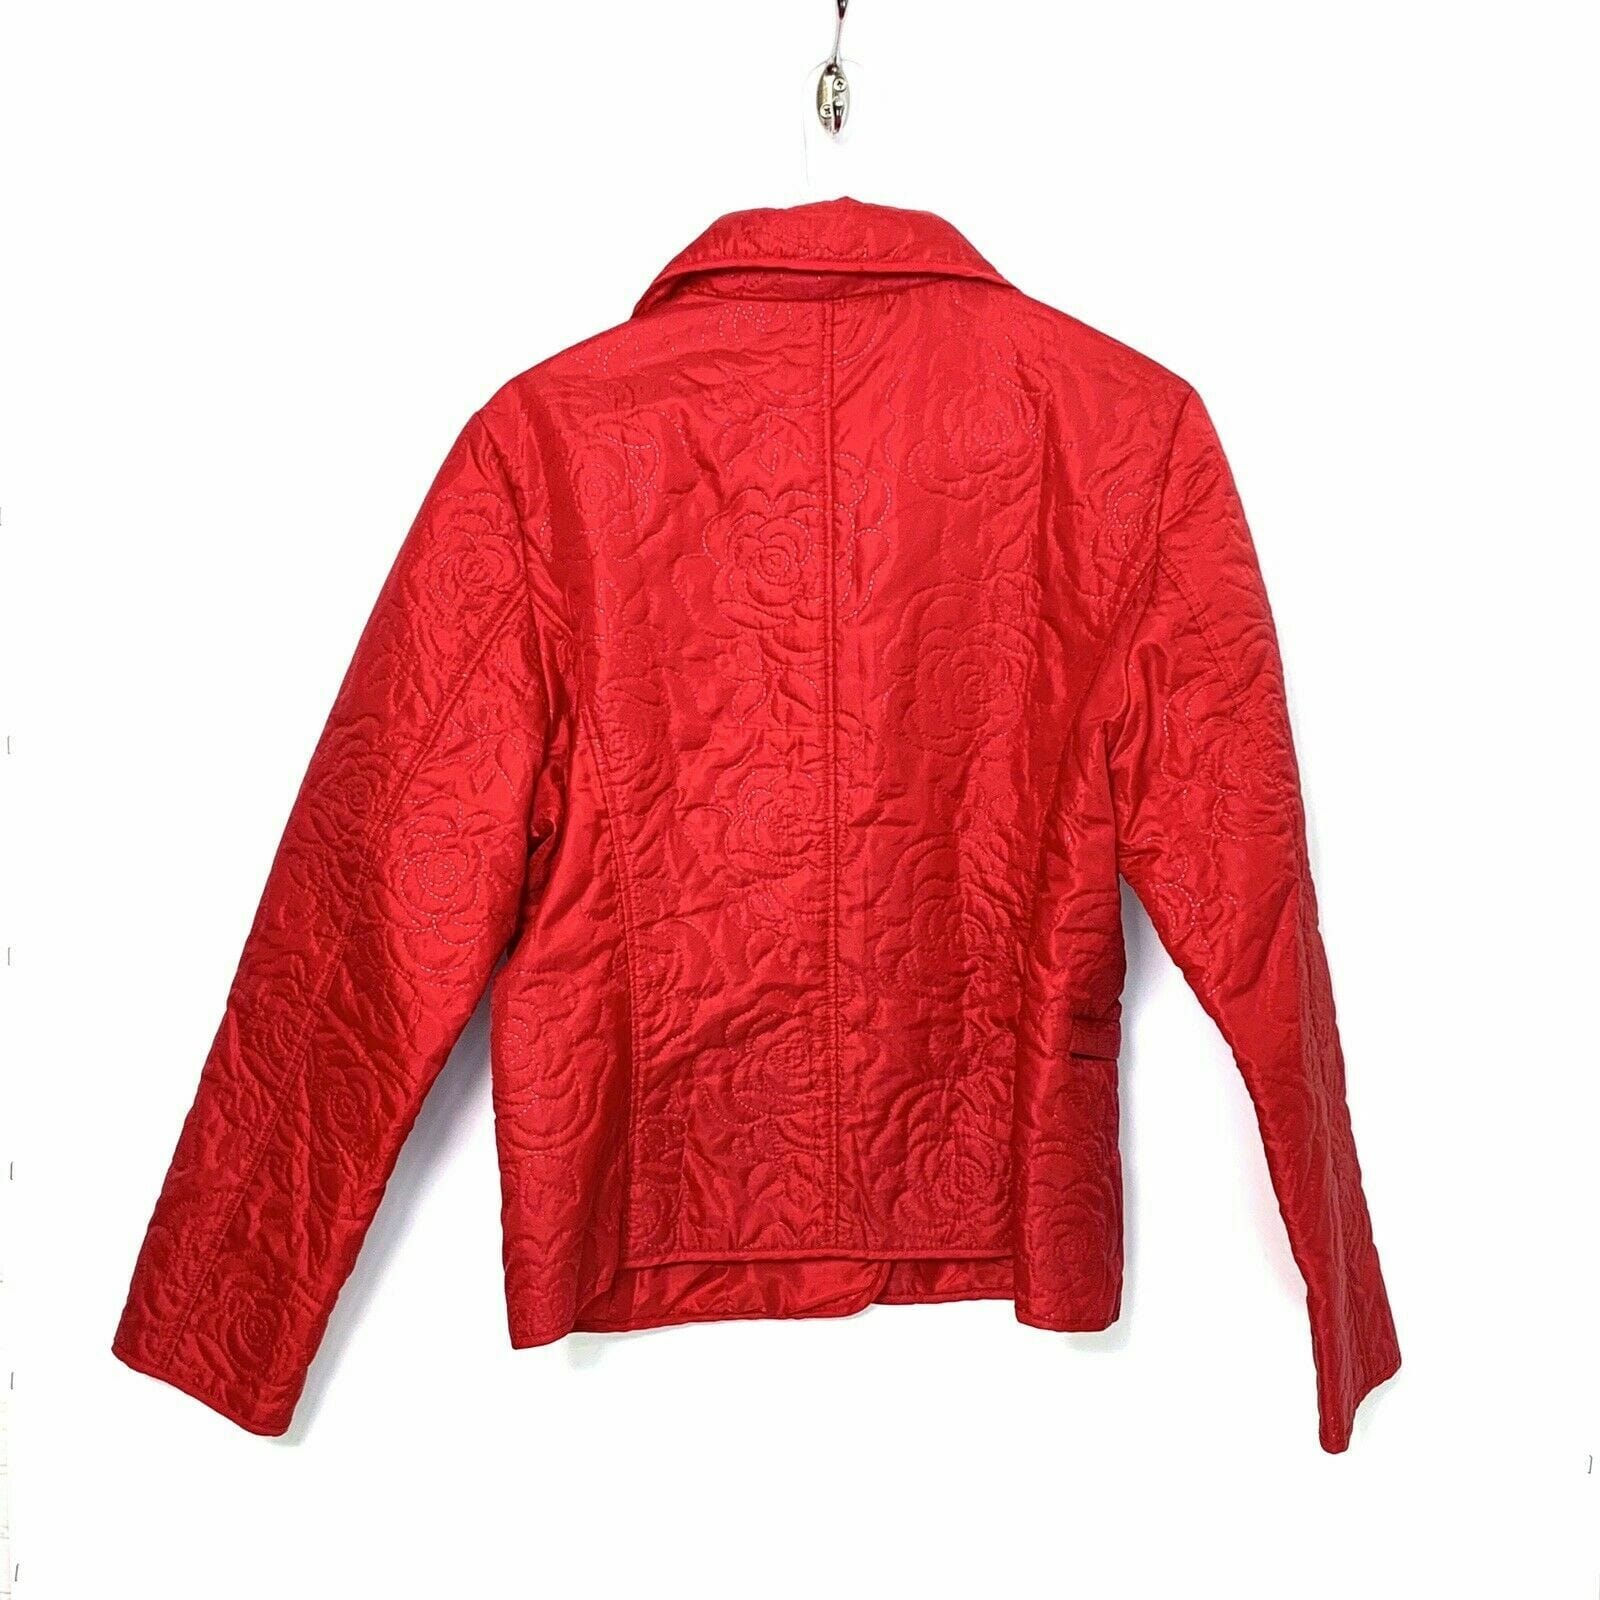 JG Hook Womens Lightweight Rose Pattern Snap Up Jacket, Red - Size M - parsimonyshoppes